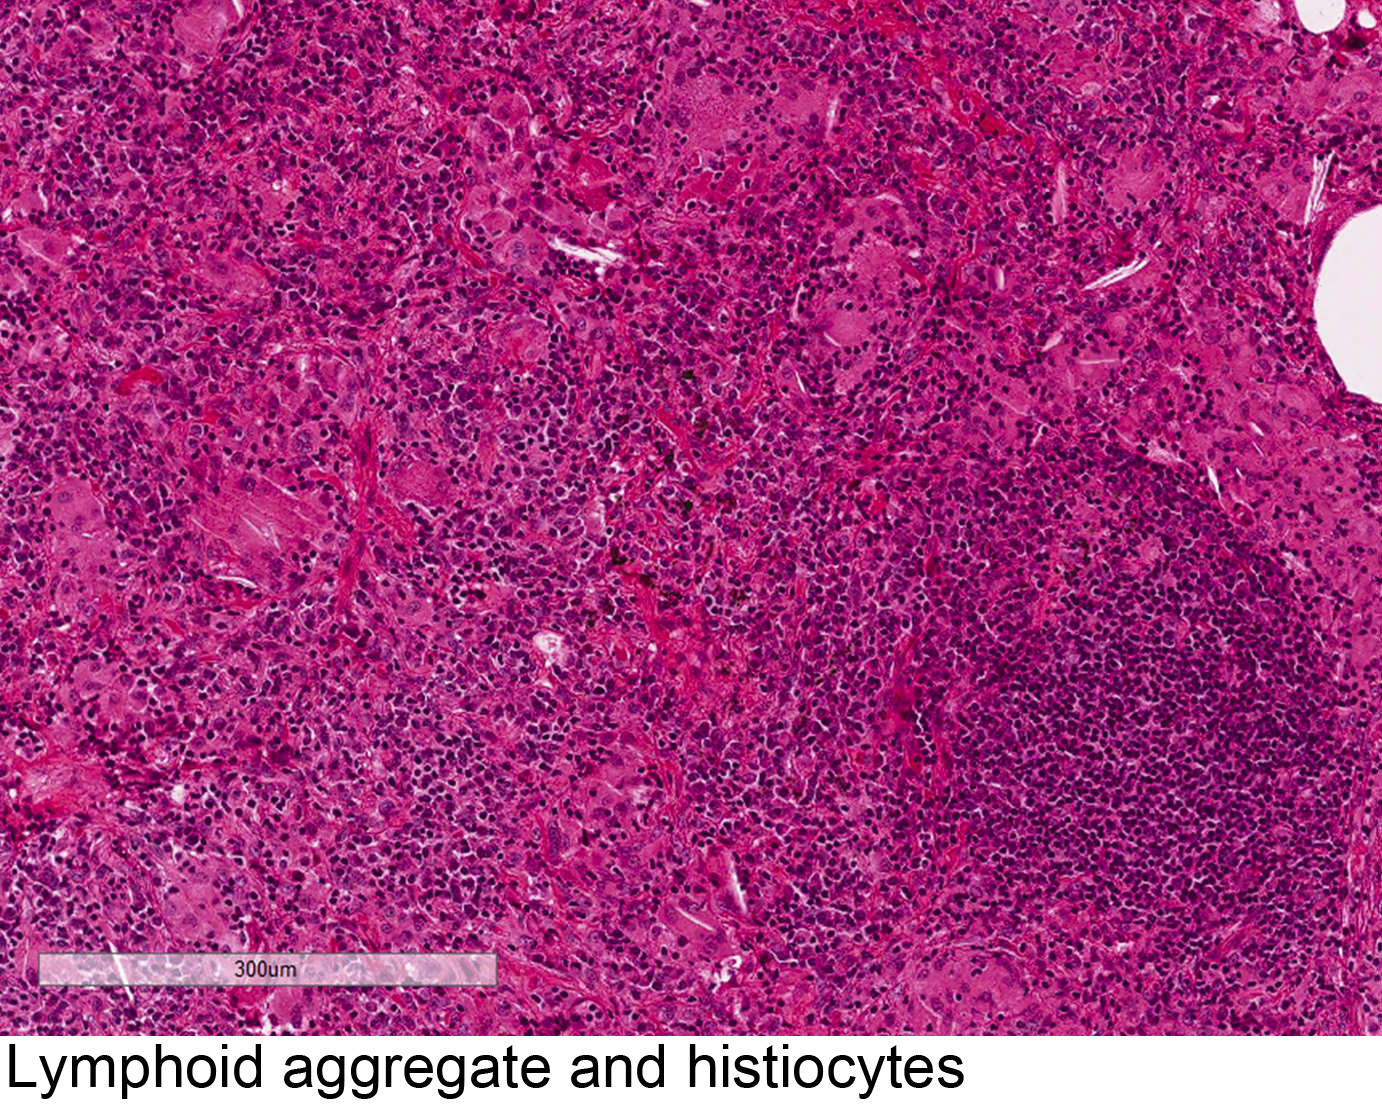 Lymphoid aggregate and histiocytes